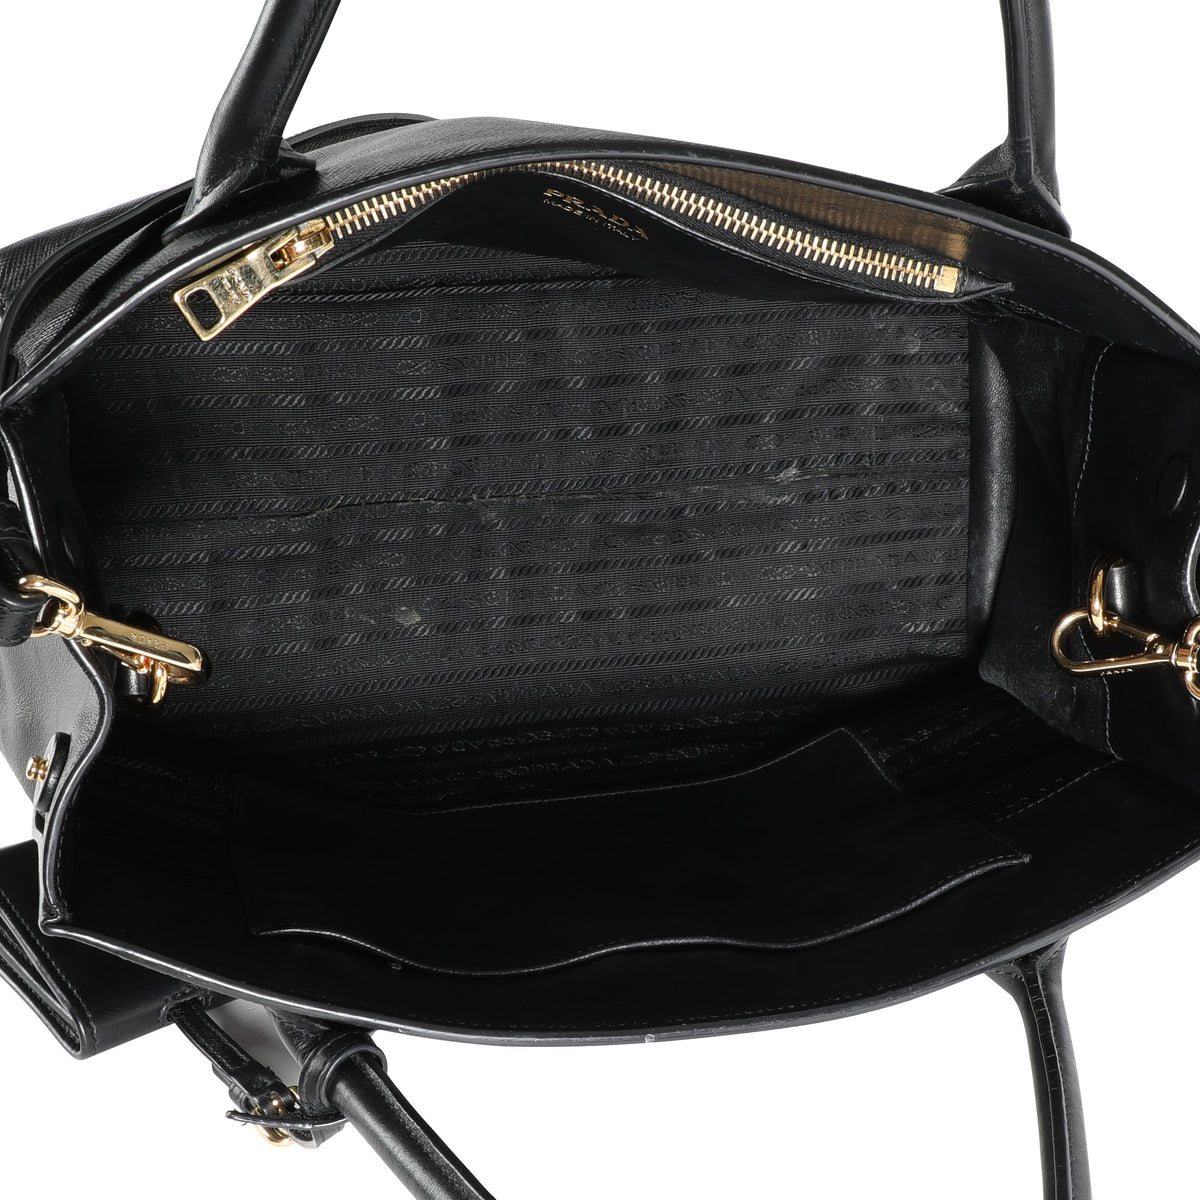 Prada Monochrome Medium Saffiano Bag in Black